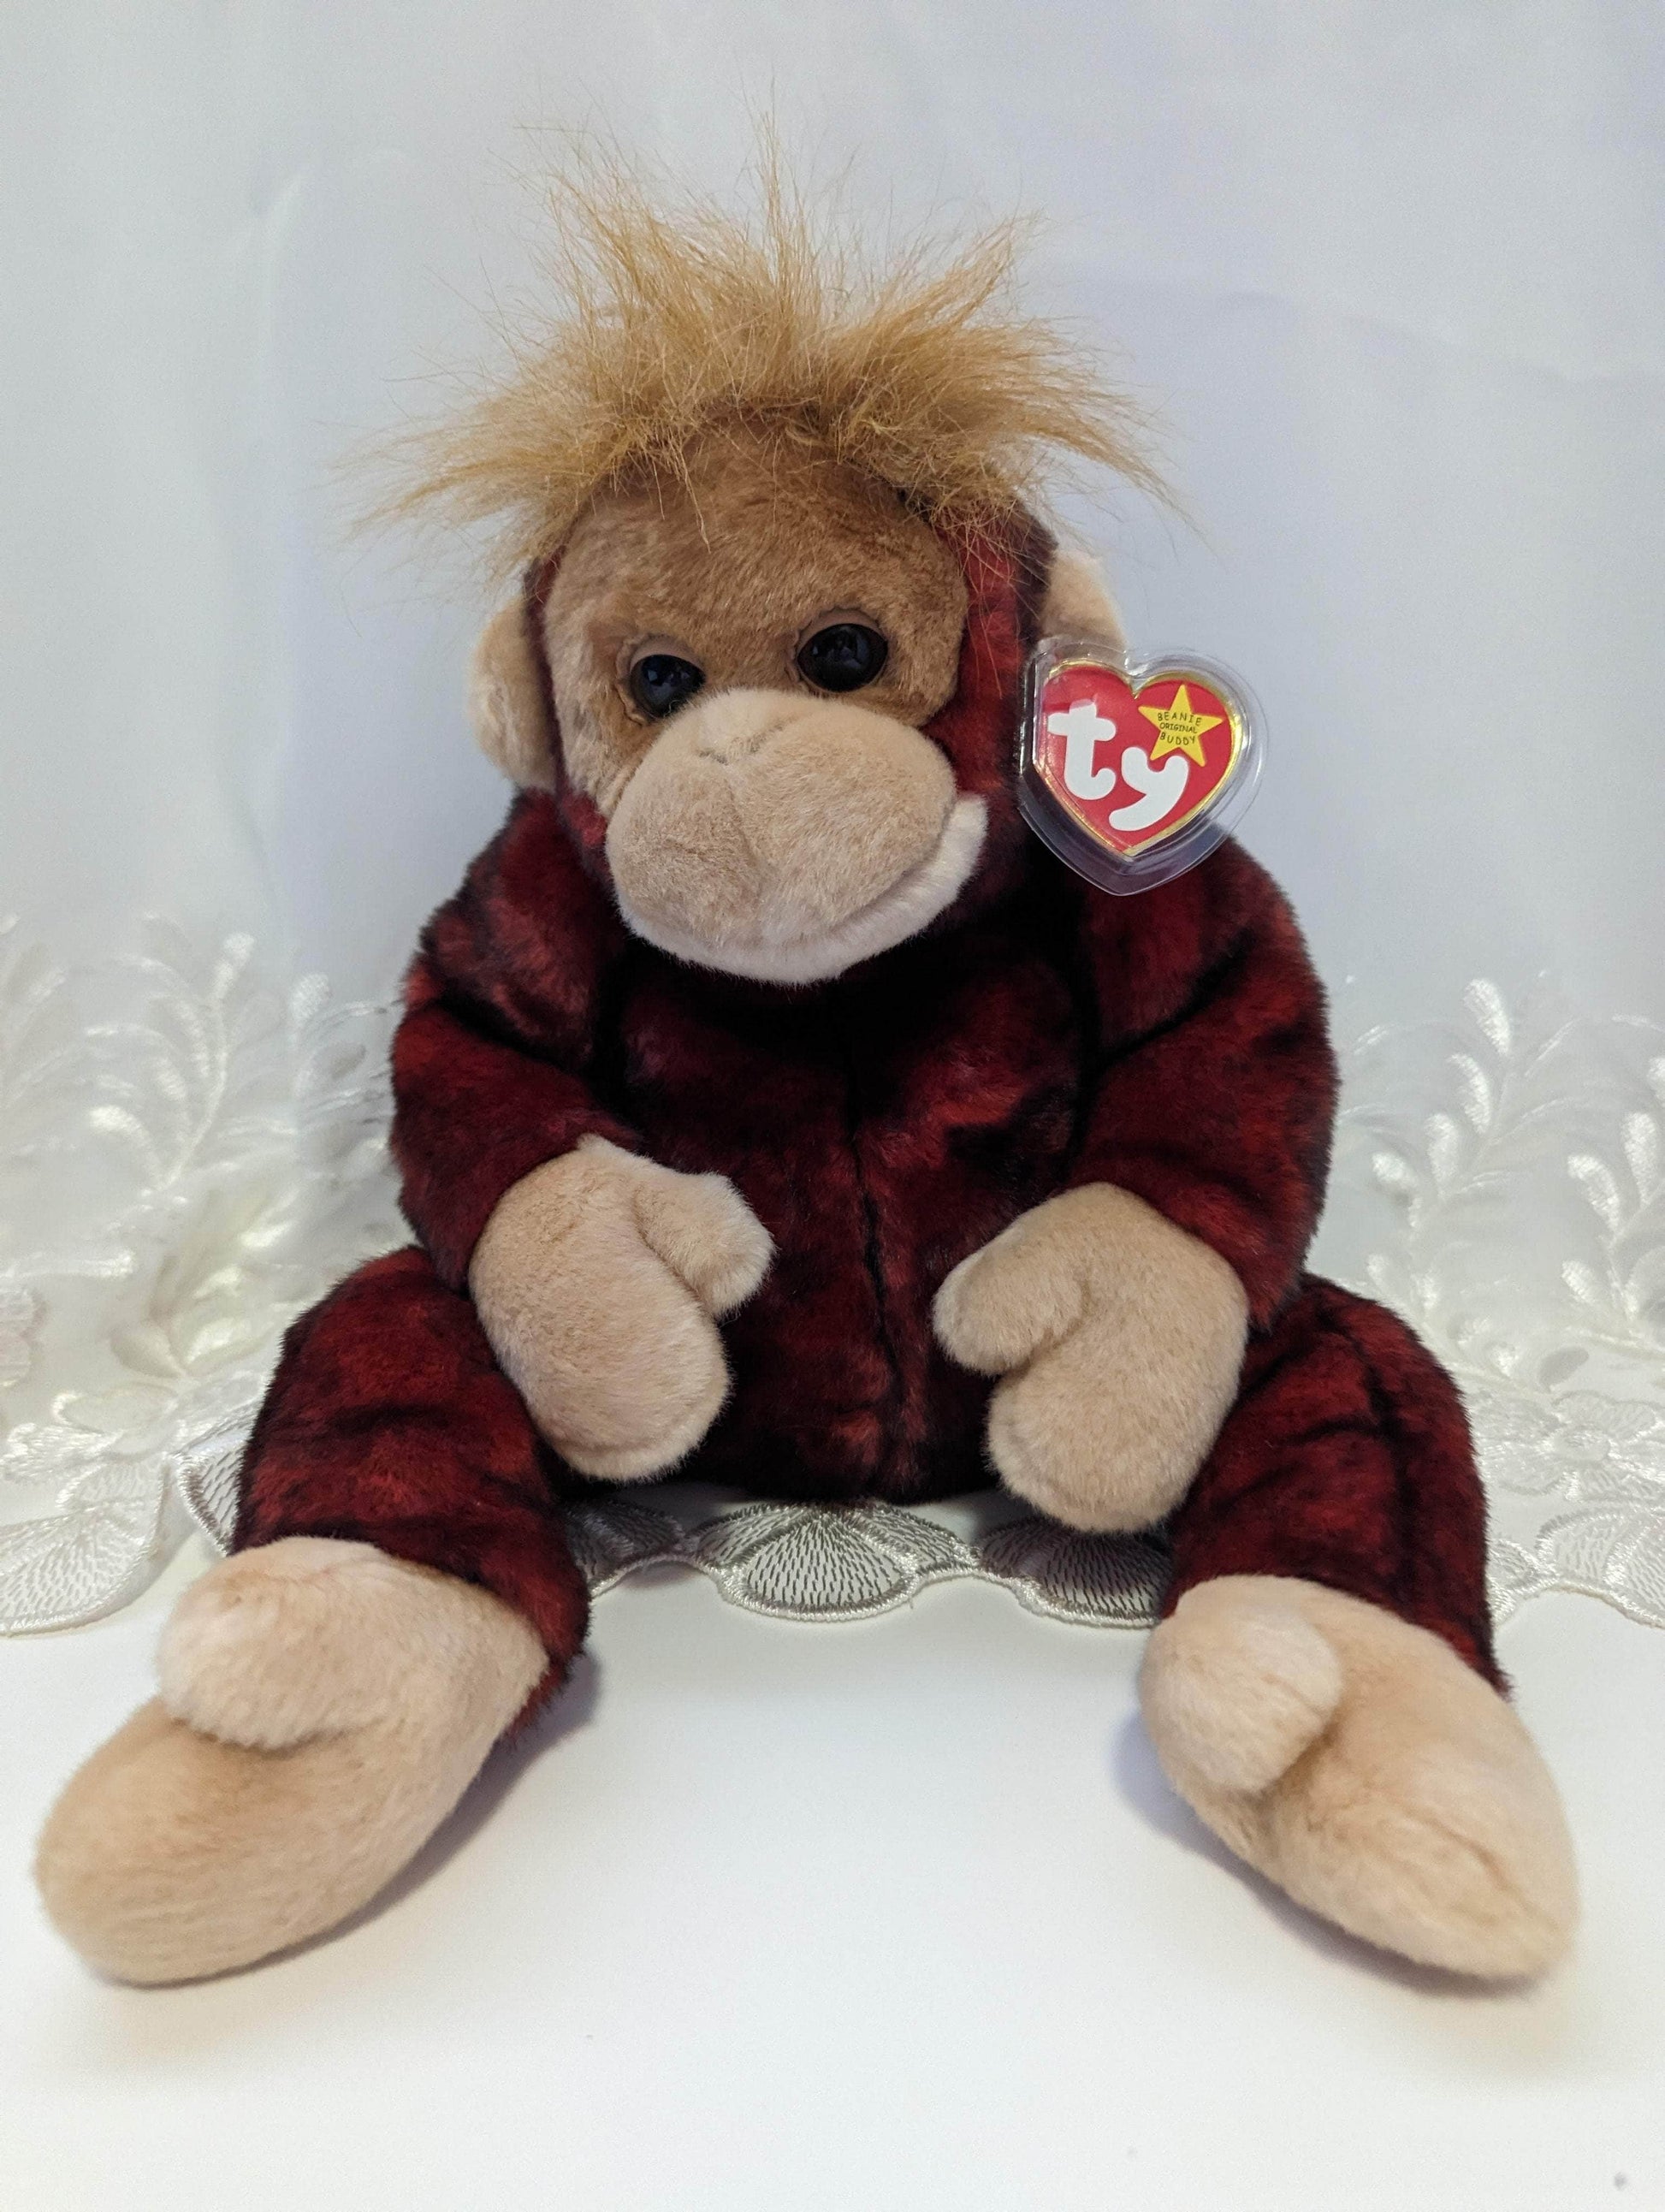 Ty Beanie buddy - Schweetheart The Orangutan (12in) - Vintage Beanies Canada